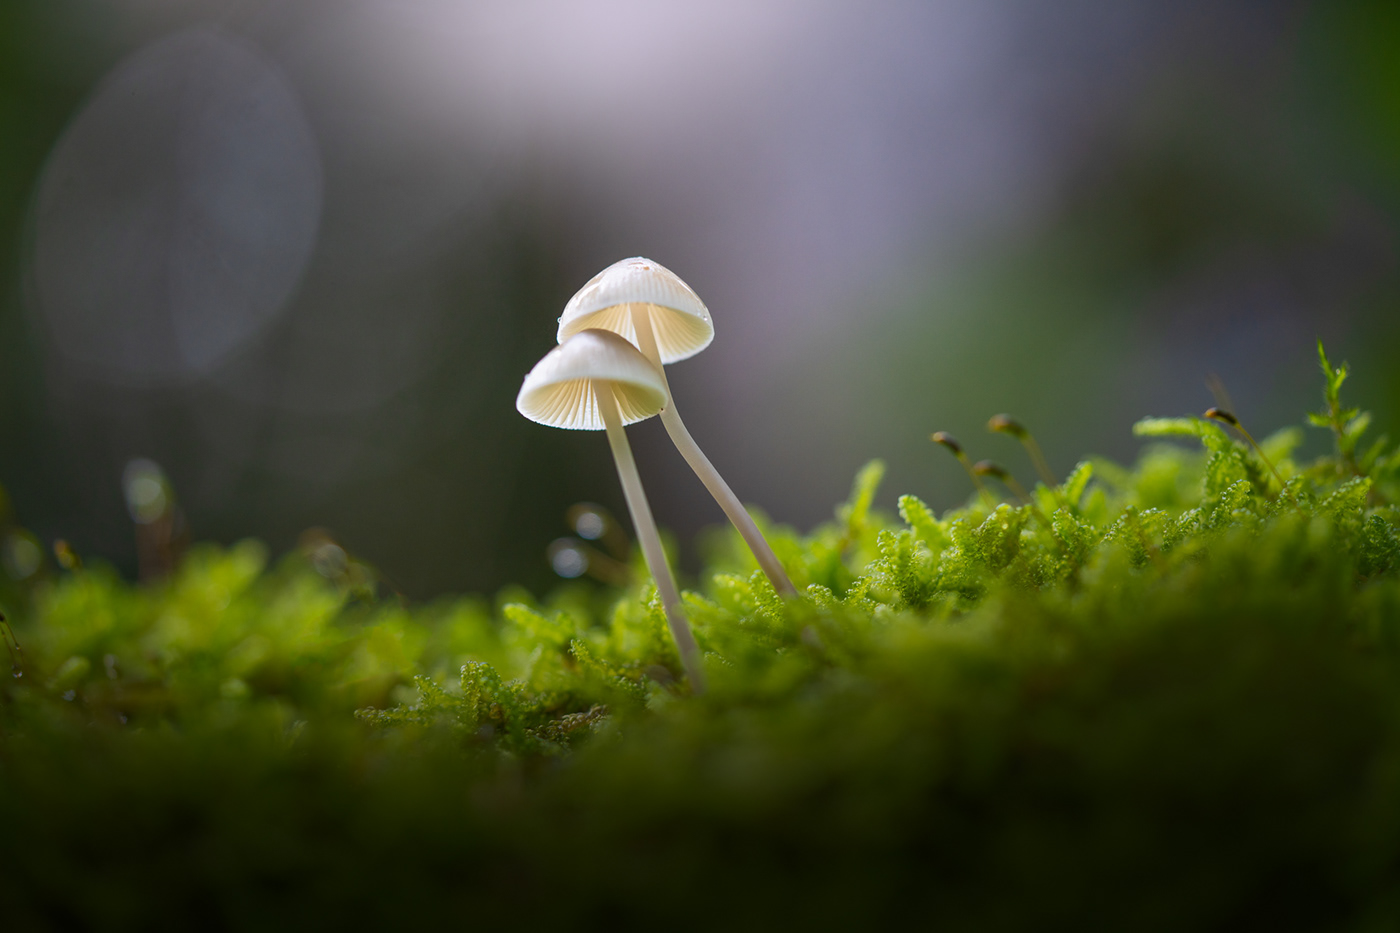 autumn forest Fungi macro Mushrooms shrooms The Netherlands